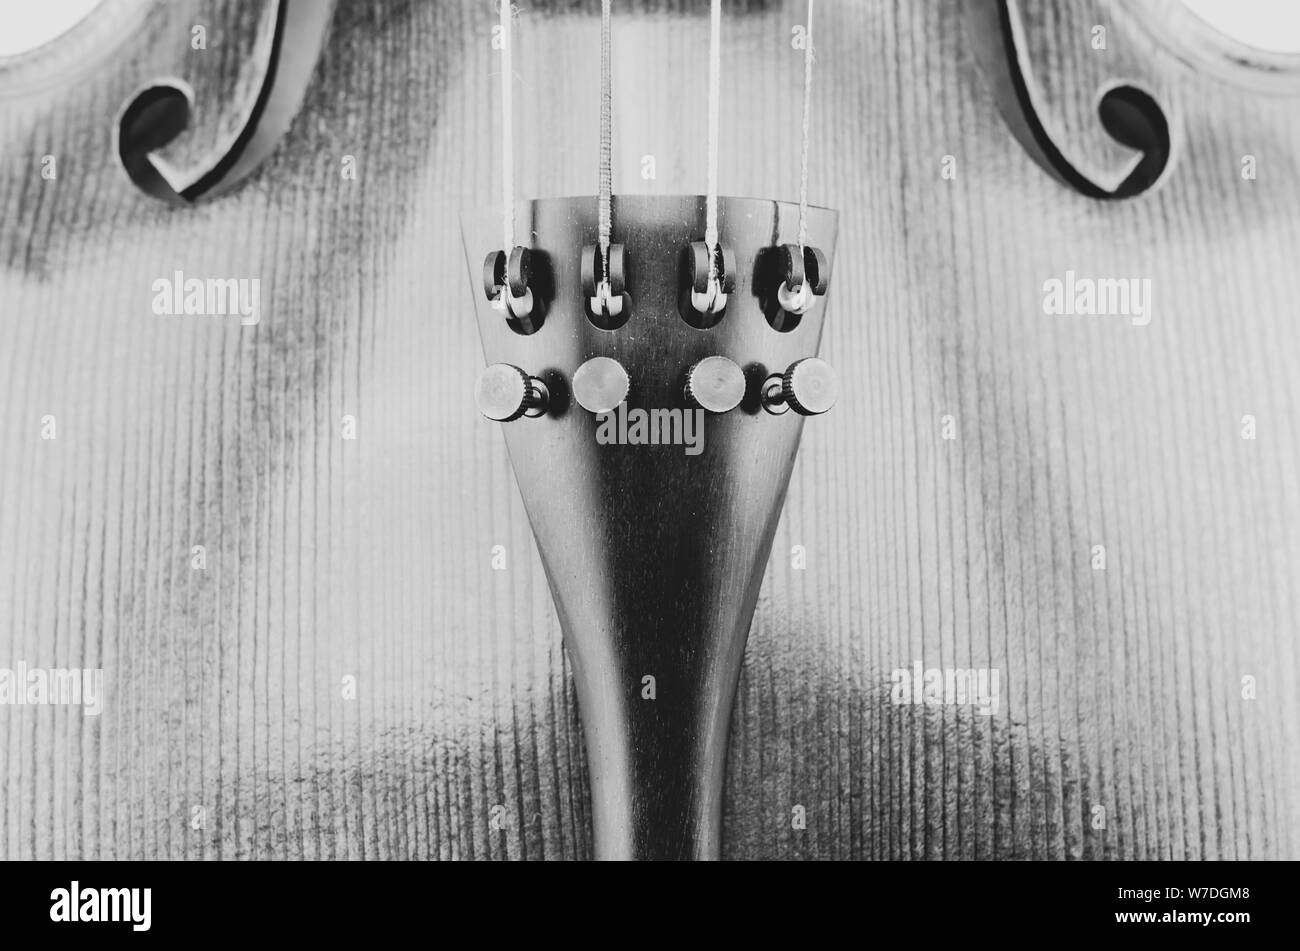 violin harmonic table high angle view close up Stock Photo